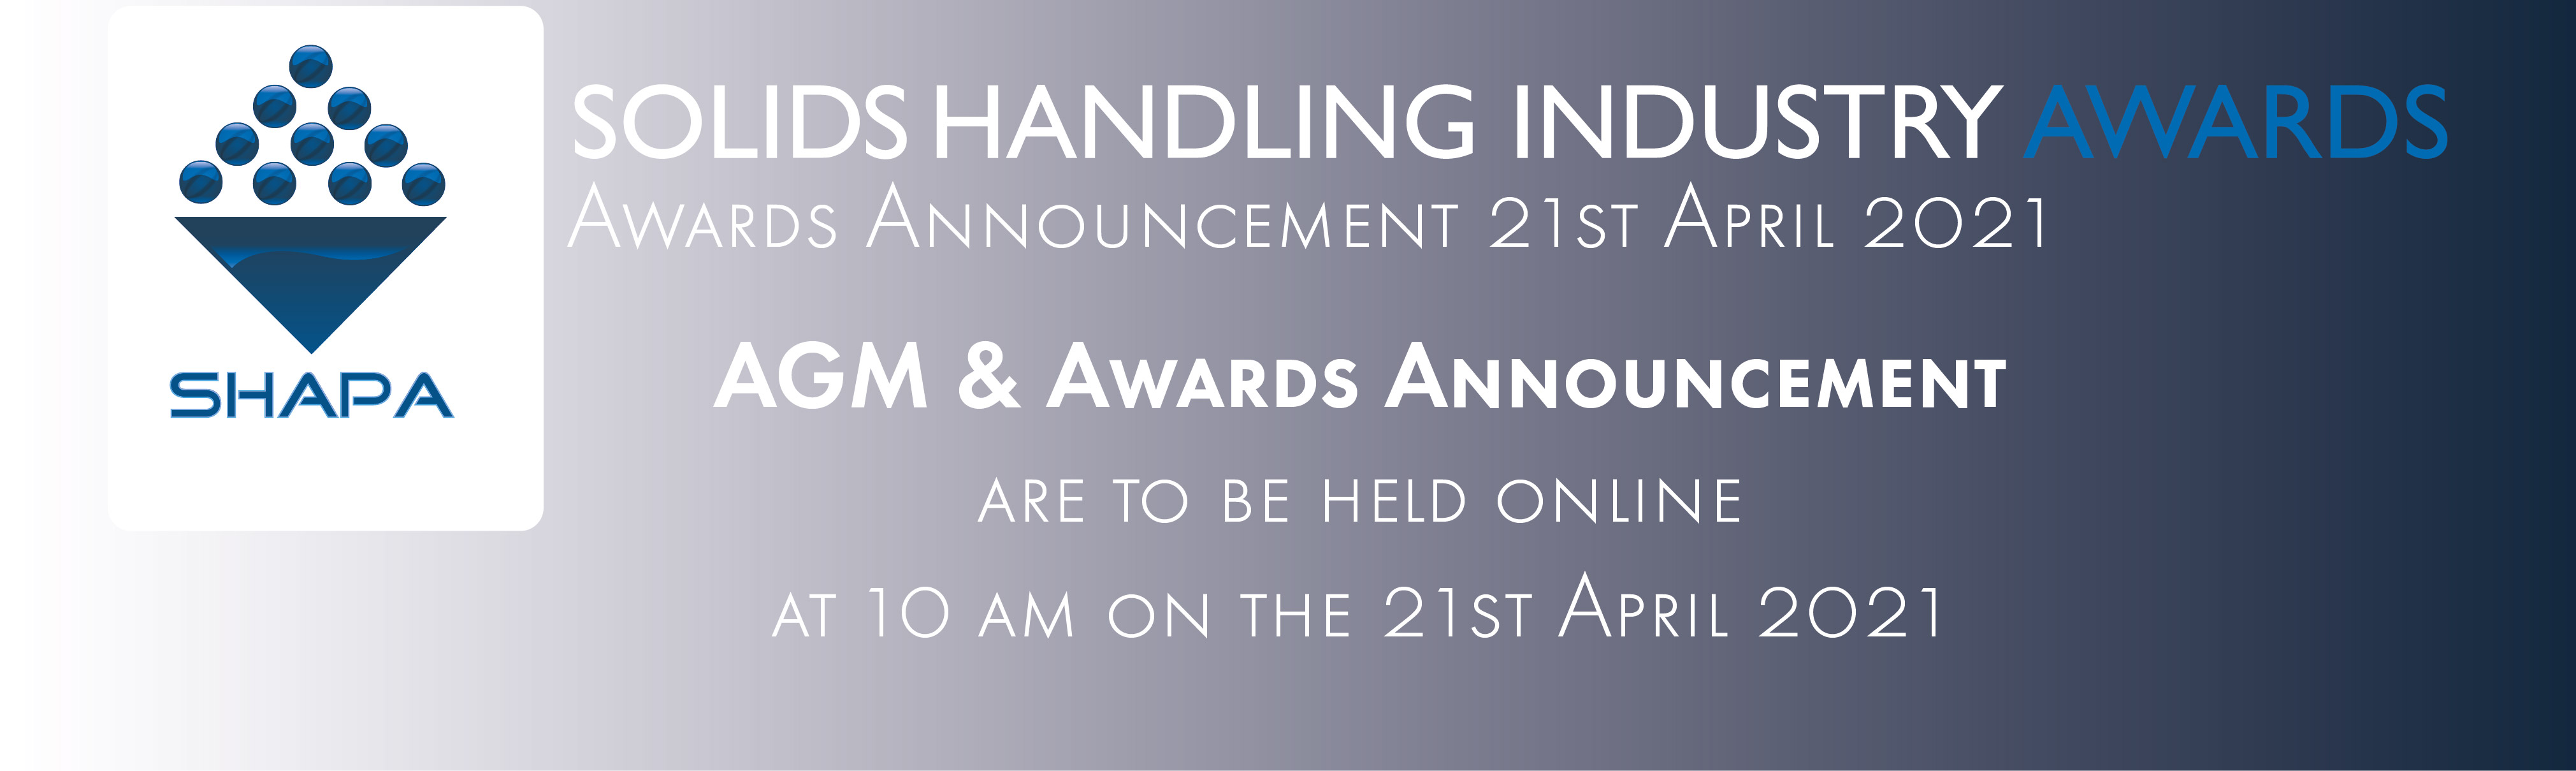 Solids handling awards 2021 